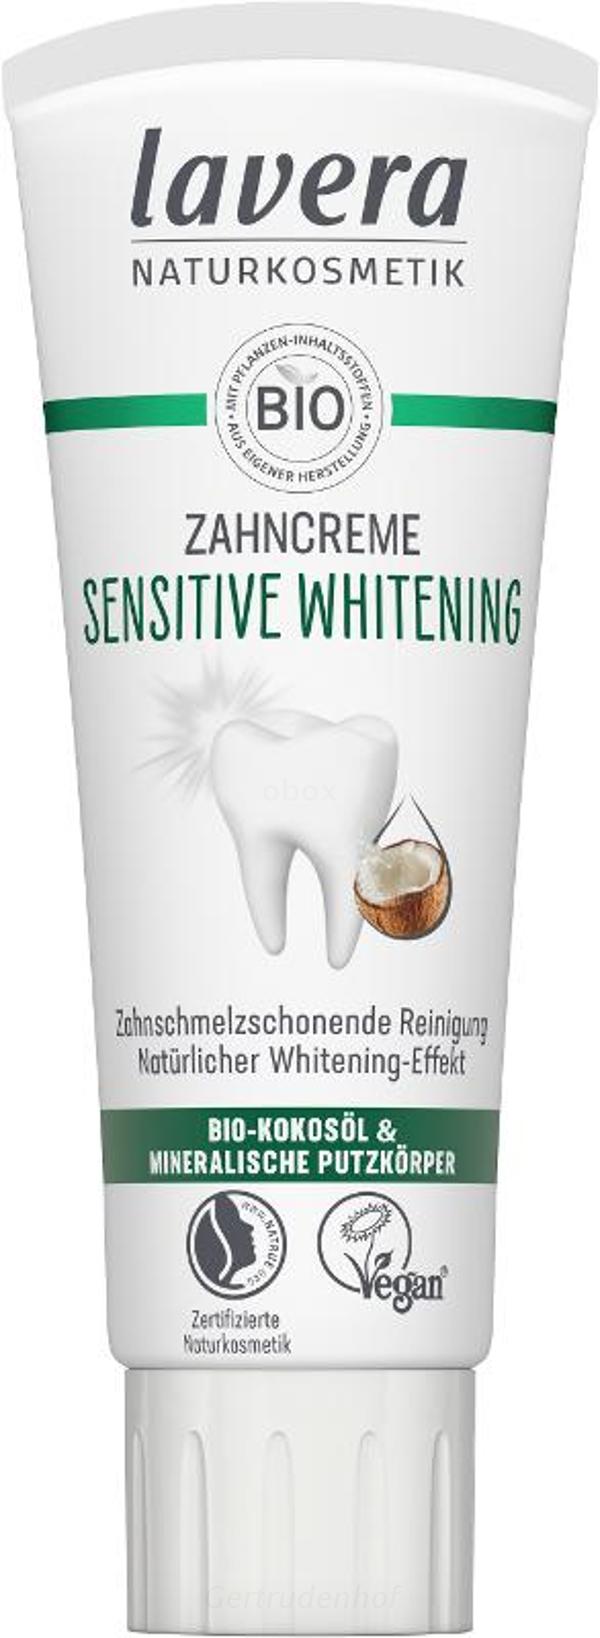 Produktfoto zu Zahncreme Whitening Basis Sens